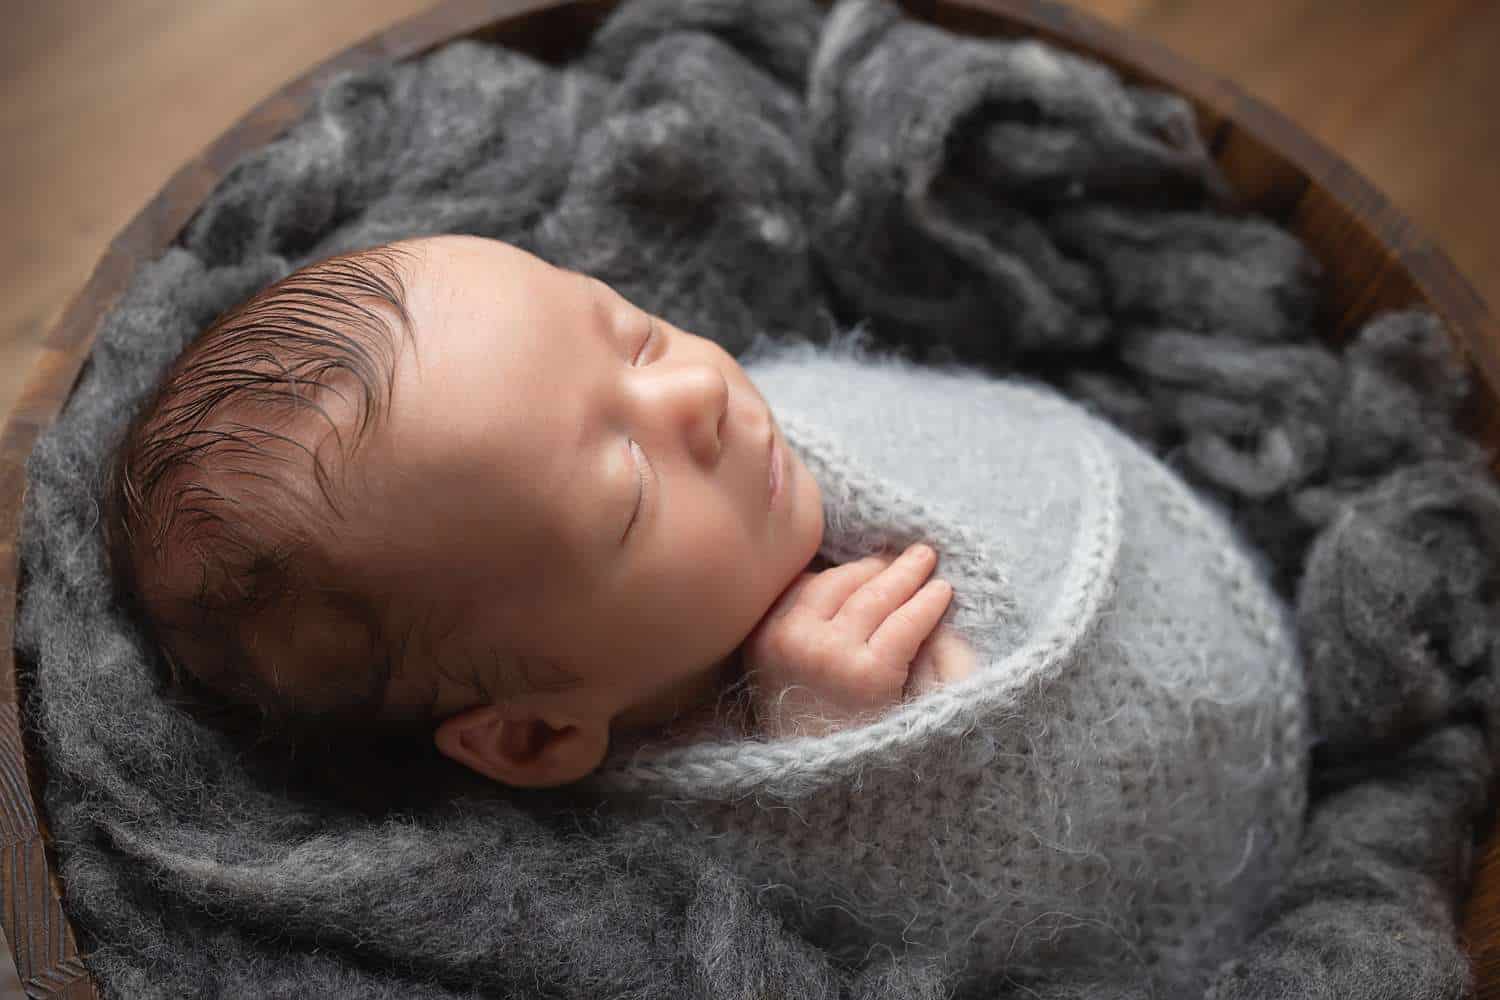 newborn photographer in rochester ny captures newborn baby boy asleep in a bucket